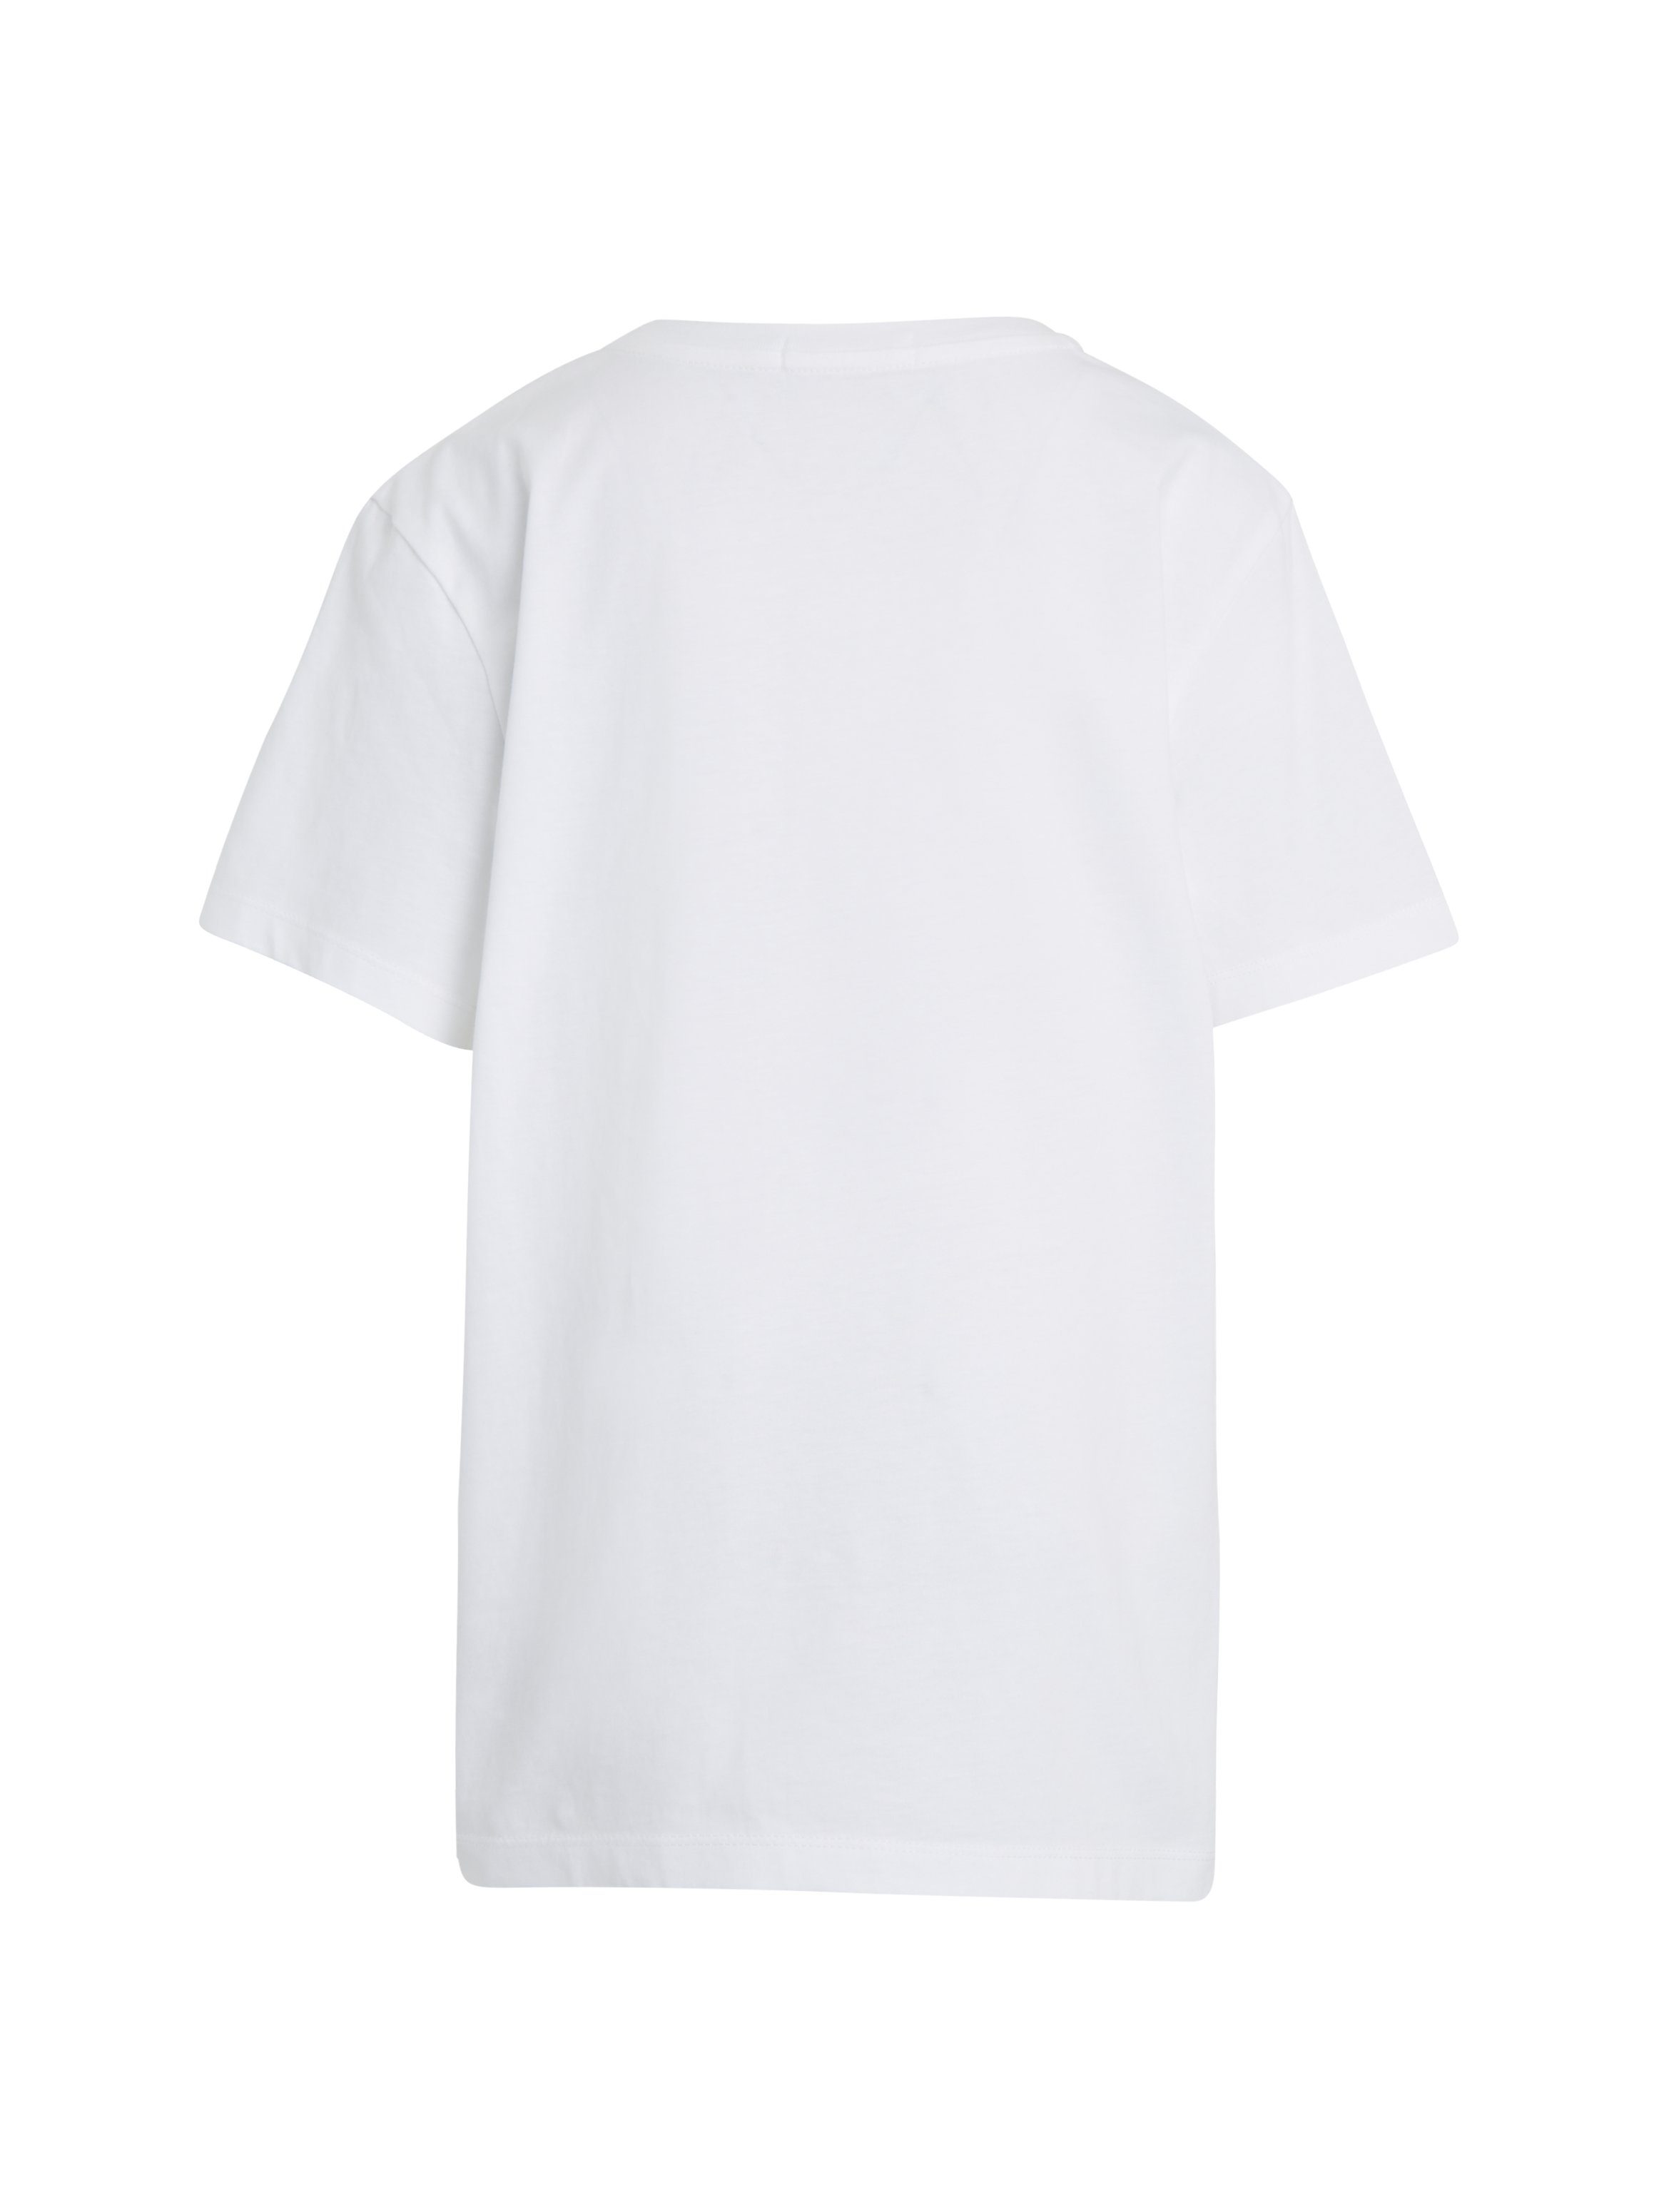 TOP White Klein CHEST MONOGRAM Jeans Calvin Bright T-Shirt